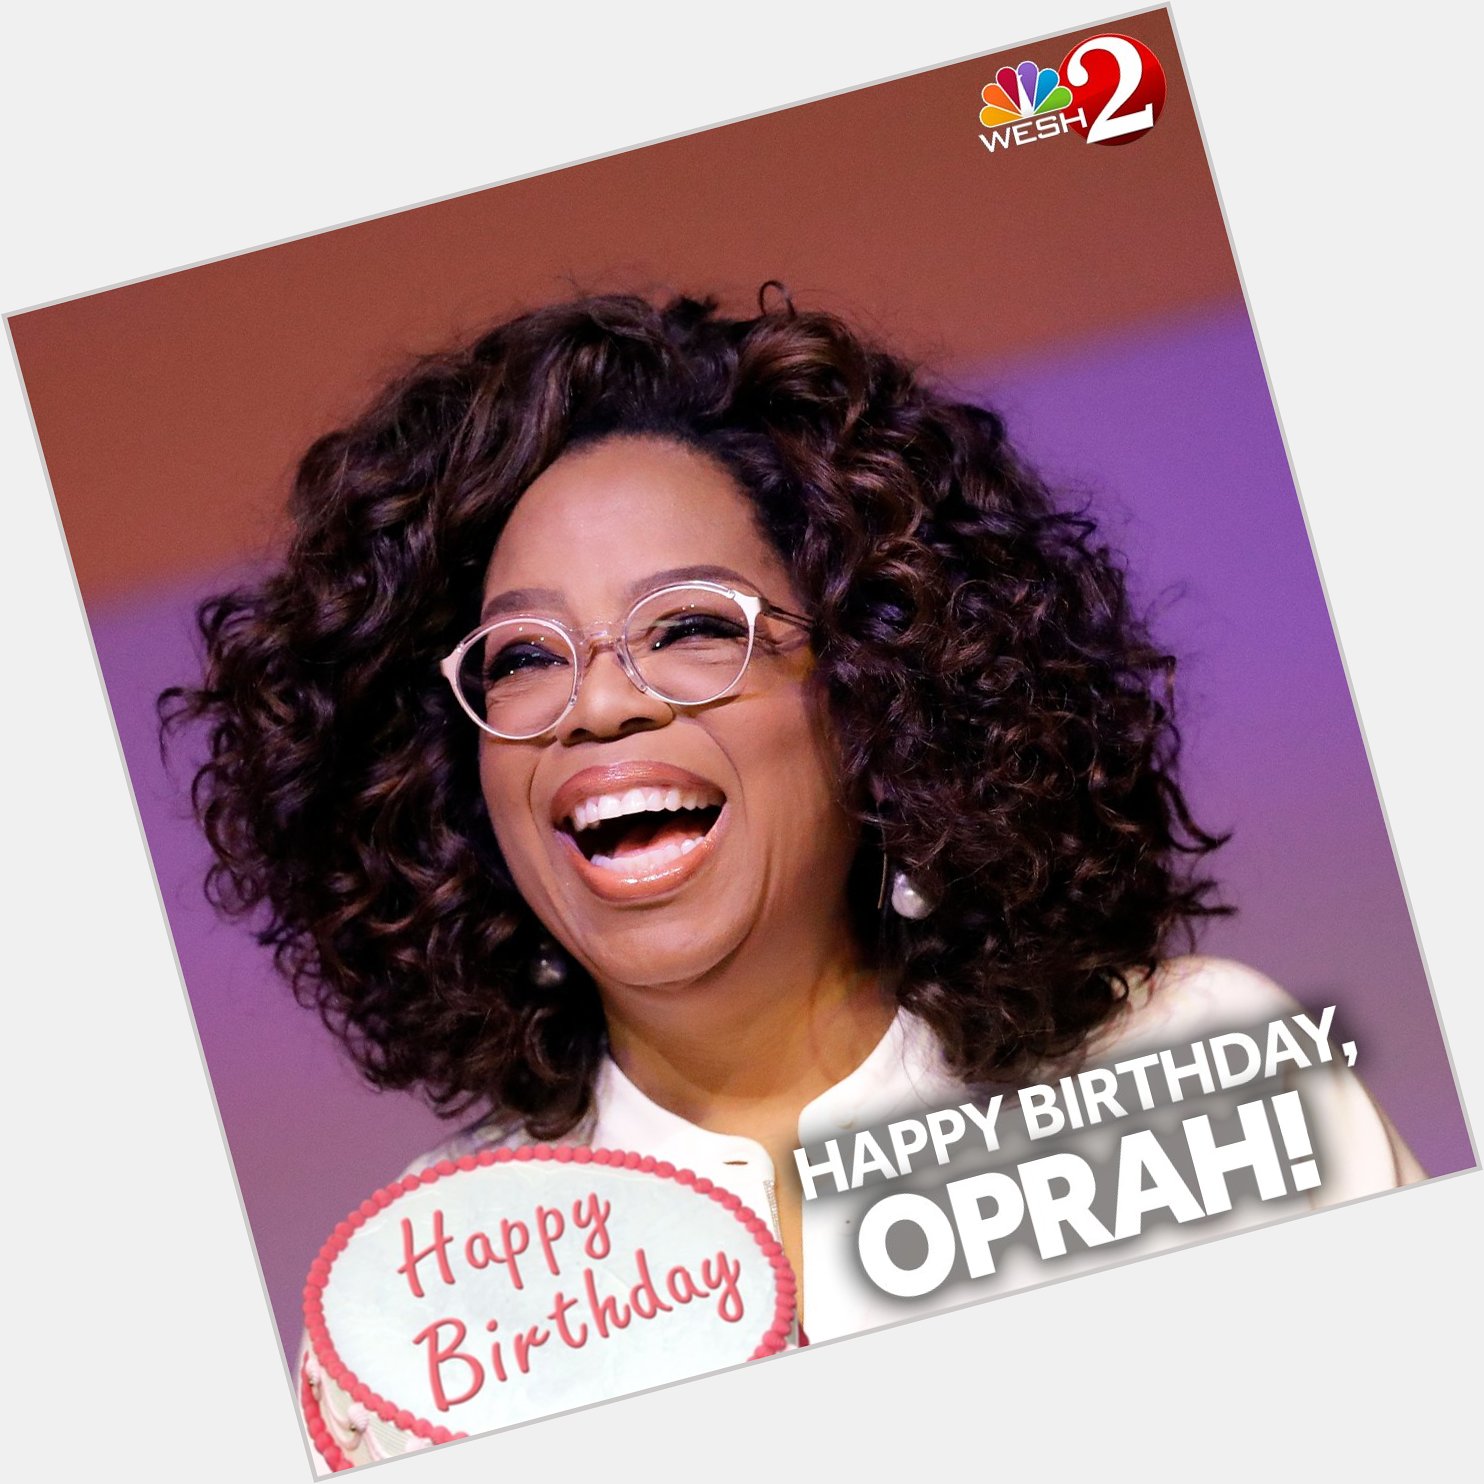    HAPPY BIRTHDAY, OPRAH! Join us in wishing Oprah Winfrey an amazing 66th Birthday! 